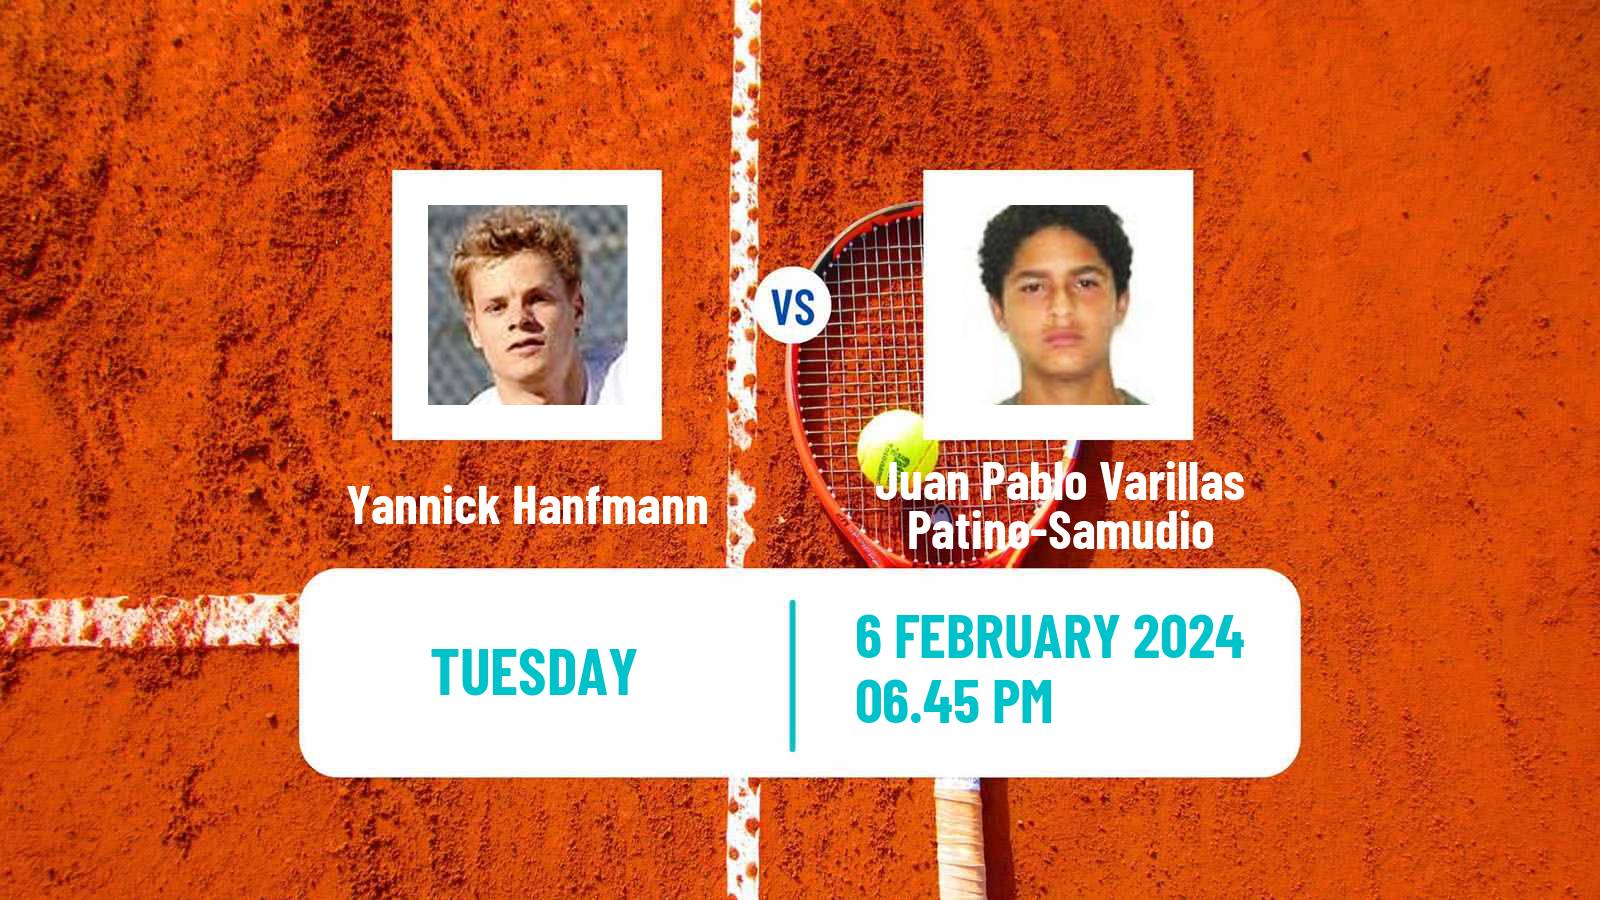 Tennis ATP Cordoba Yannick Hanfmann - Juan Pablo Varillas Patino-Samudio